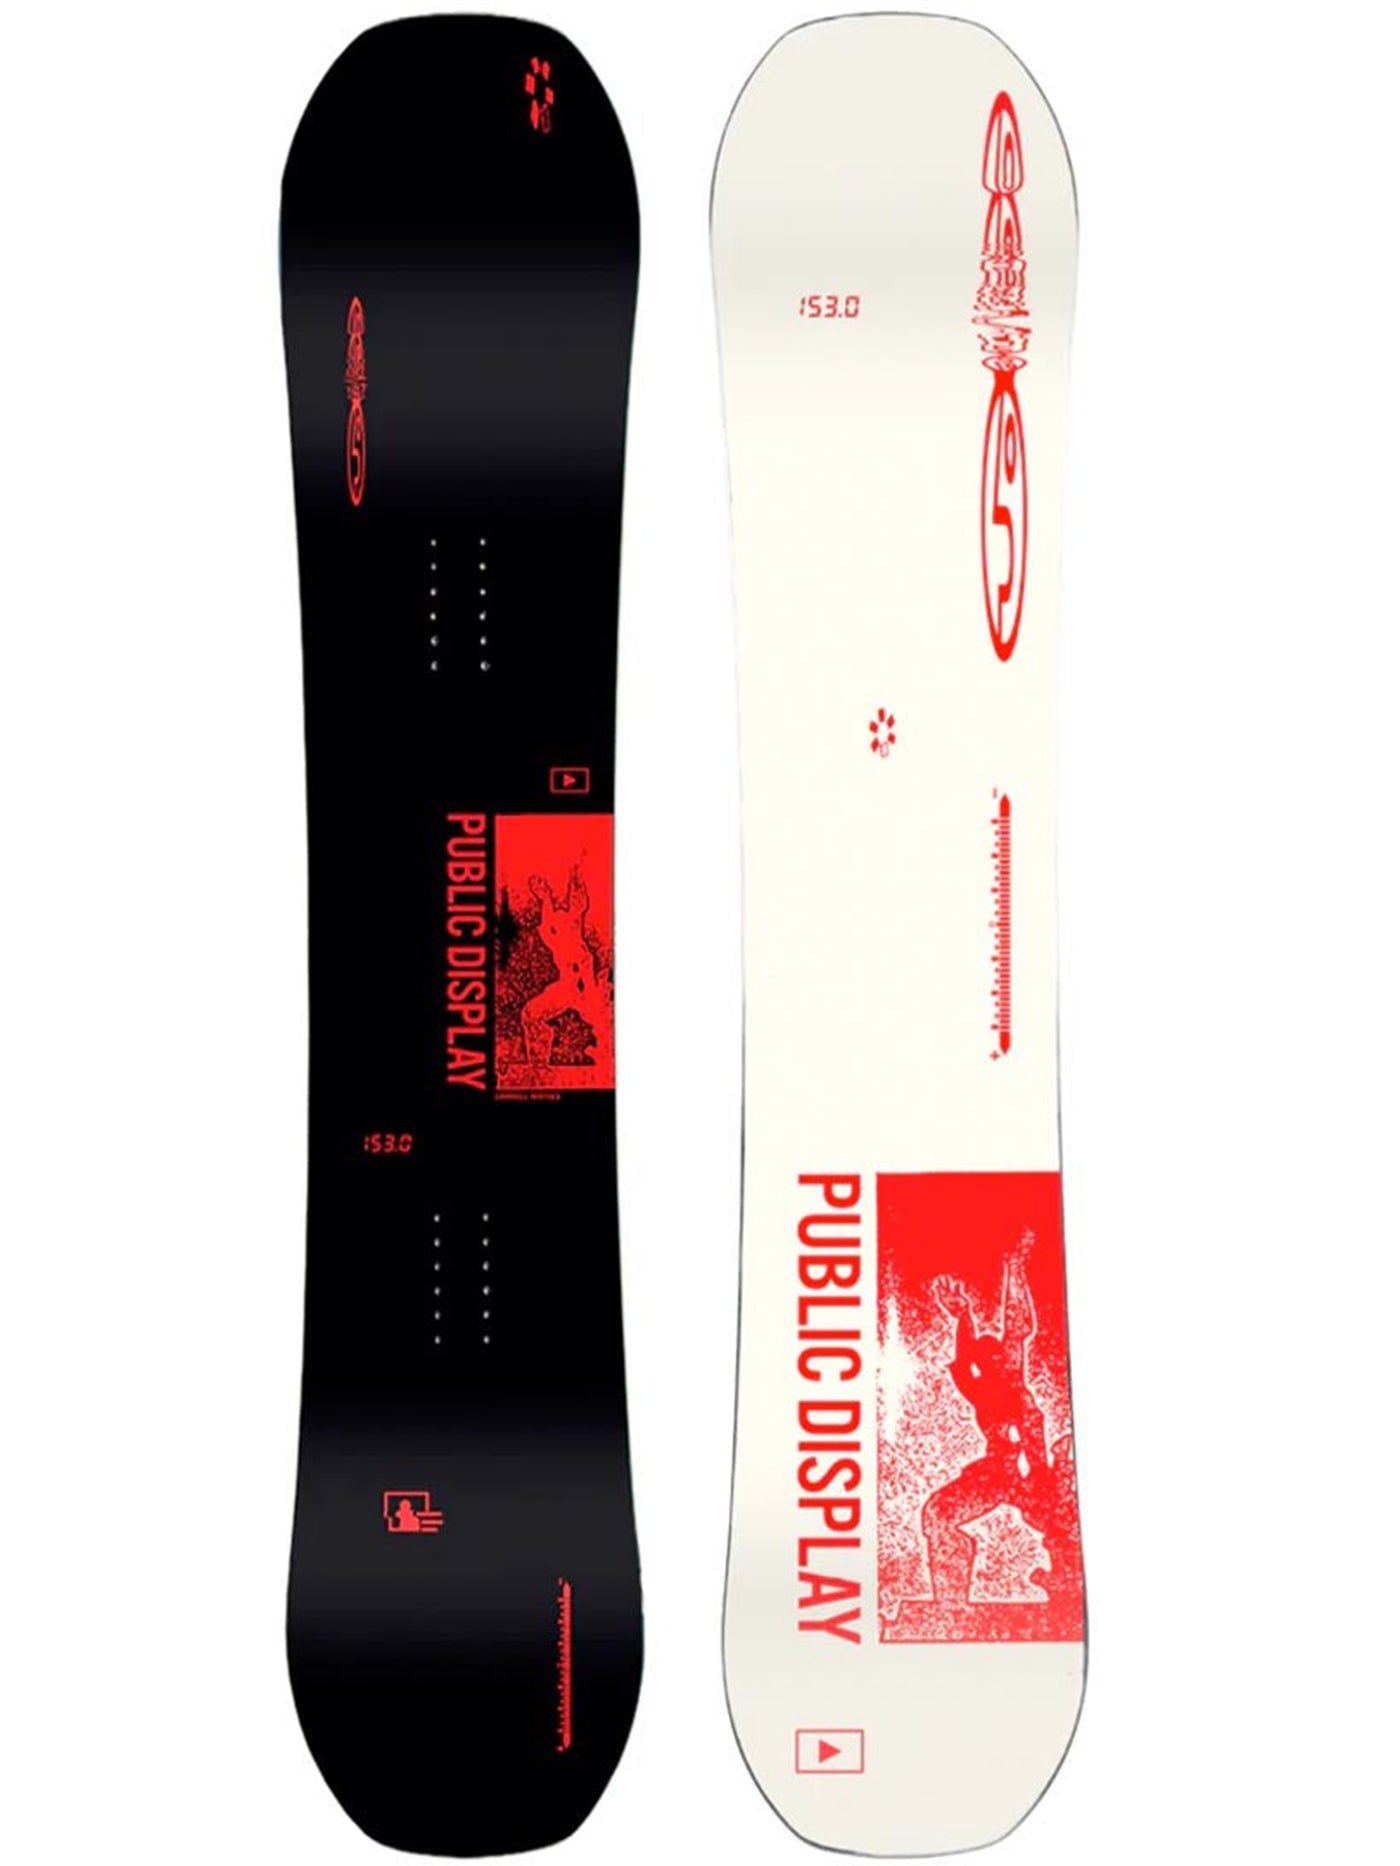 Display 153cm Snowboard